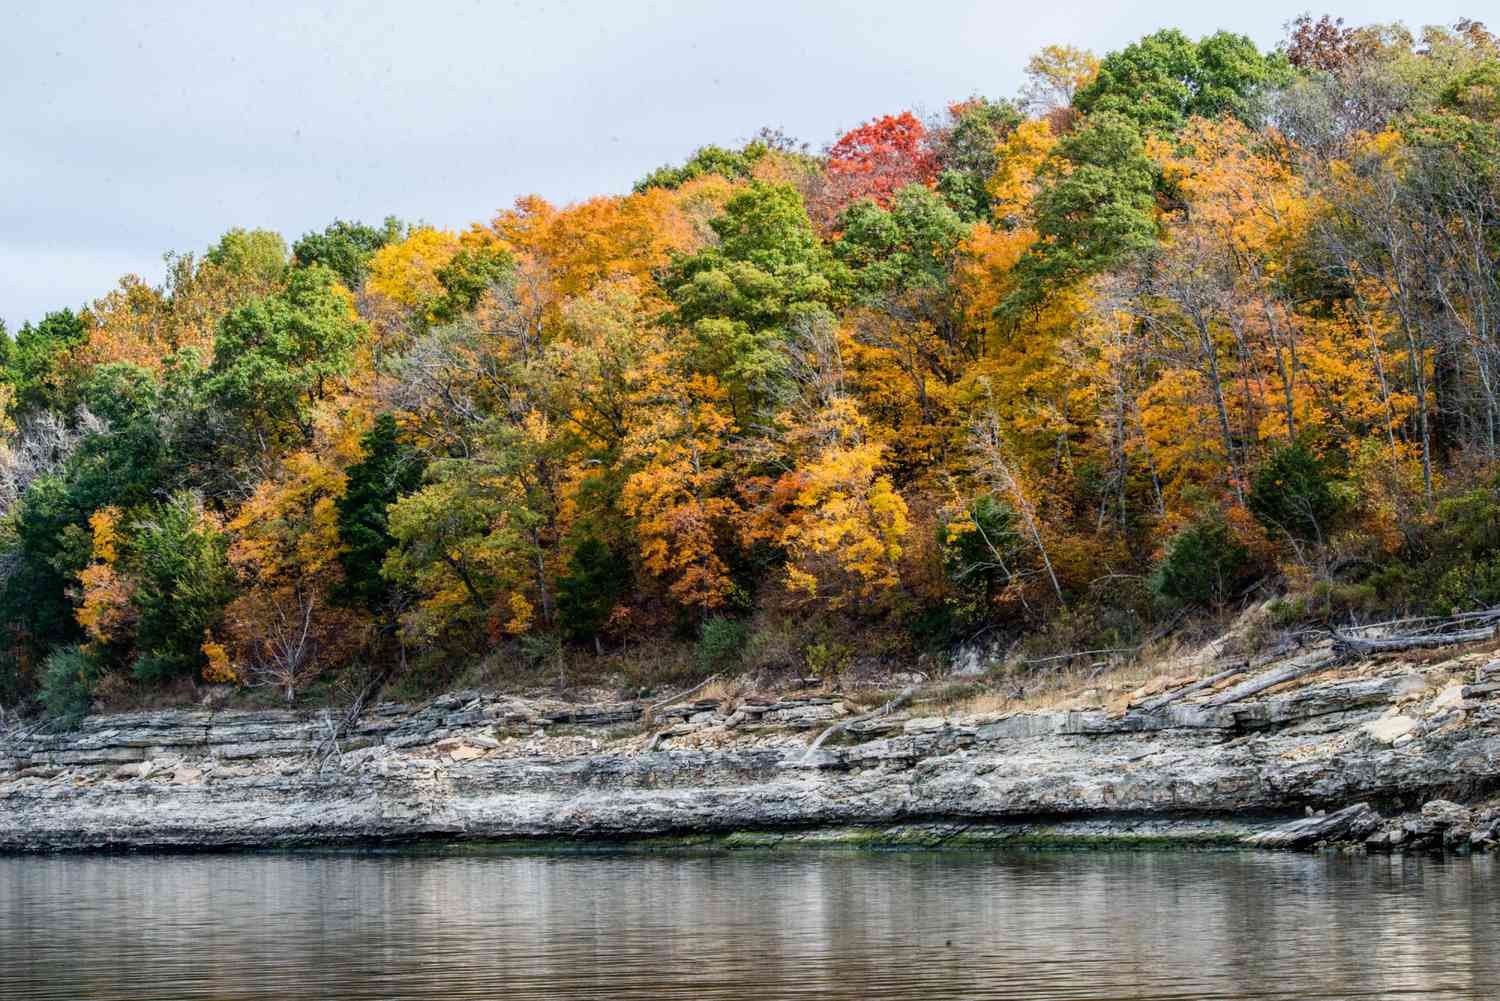 Colorful fall foliage in Mark Twain State Park, Missouri